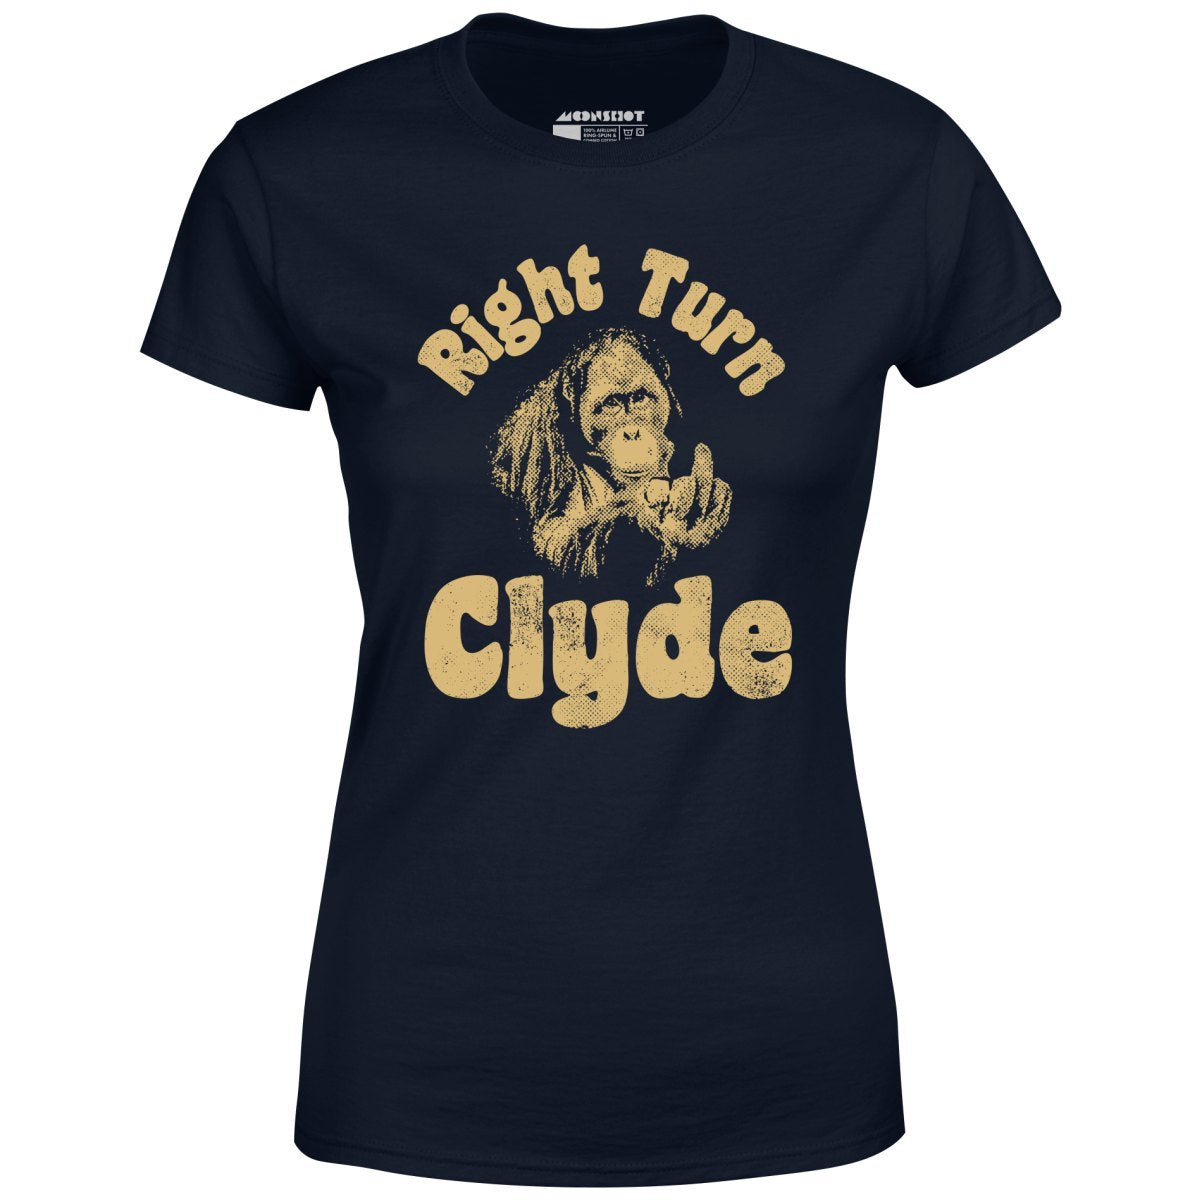 Right Turn Clyde - Women's T-Shirt